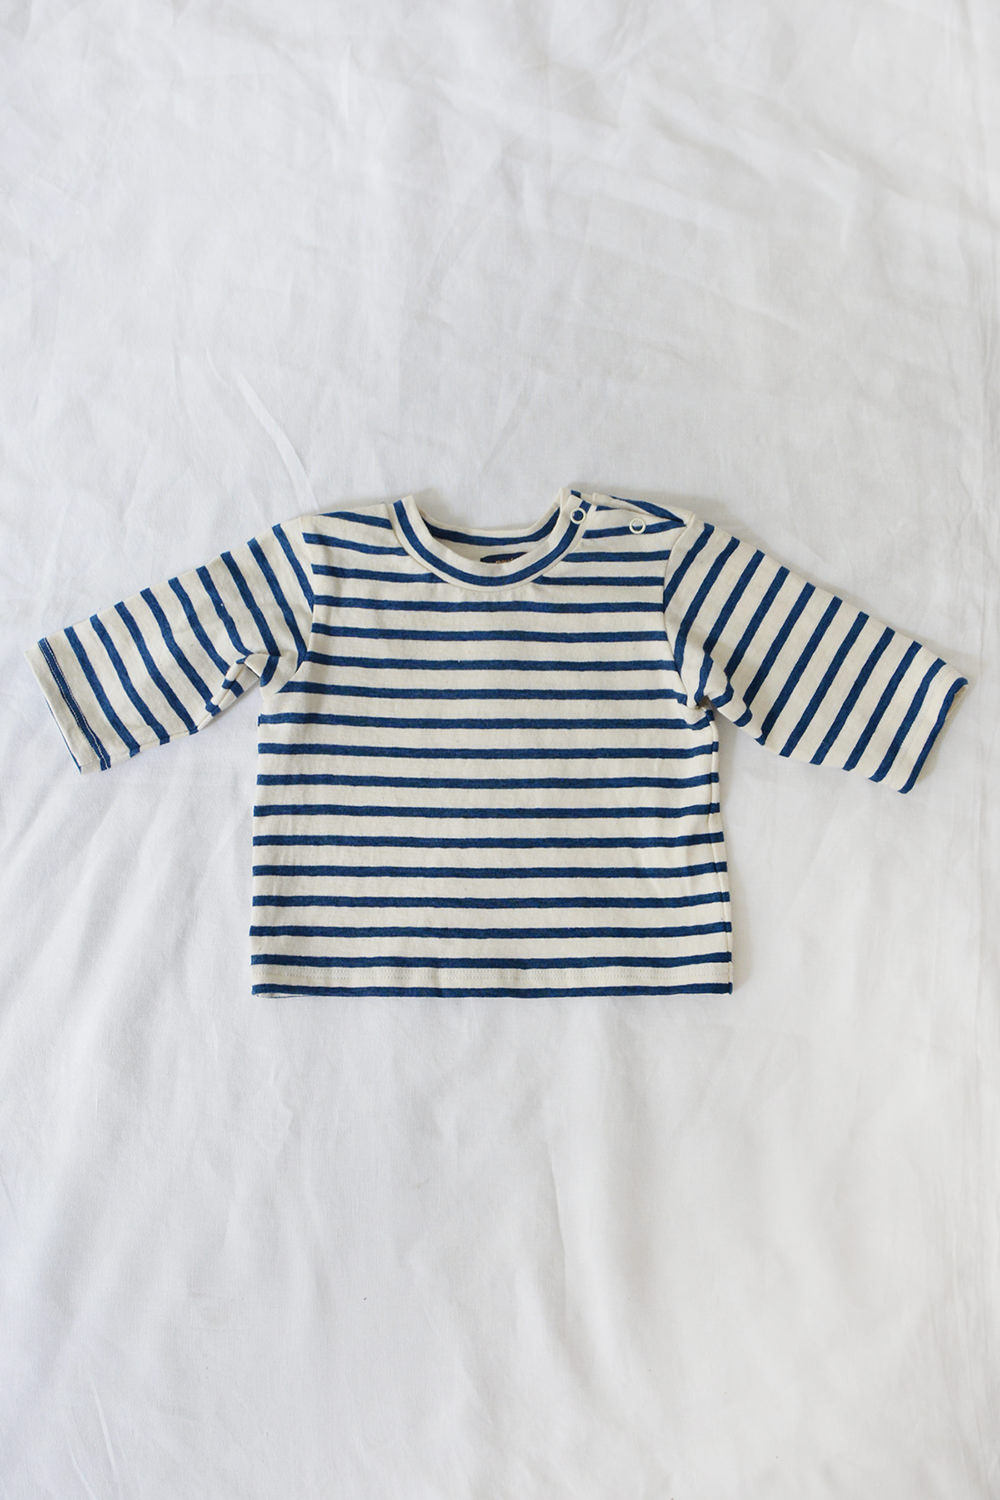 Shoulder Snap Baby Pullover Blake - Navy Stripe Top画像